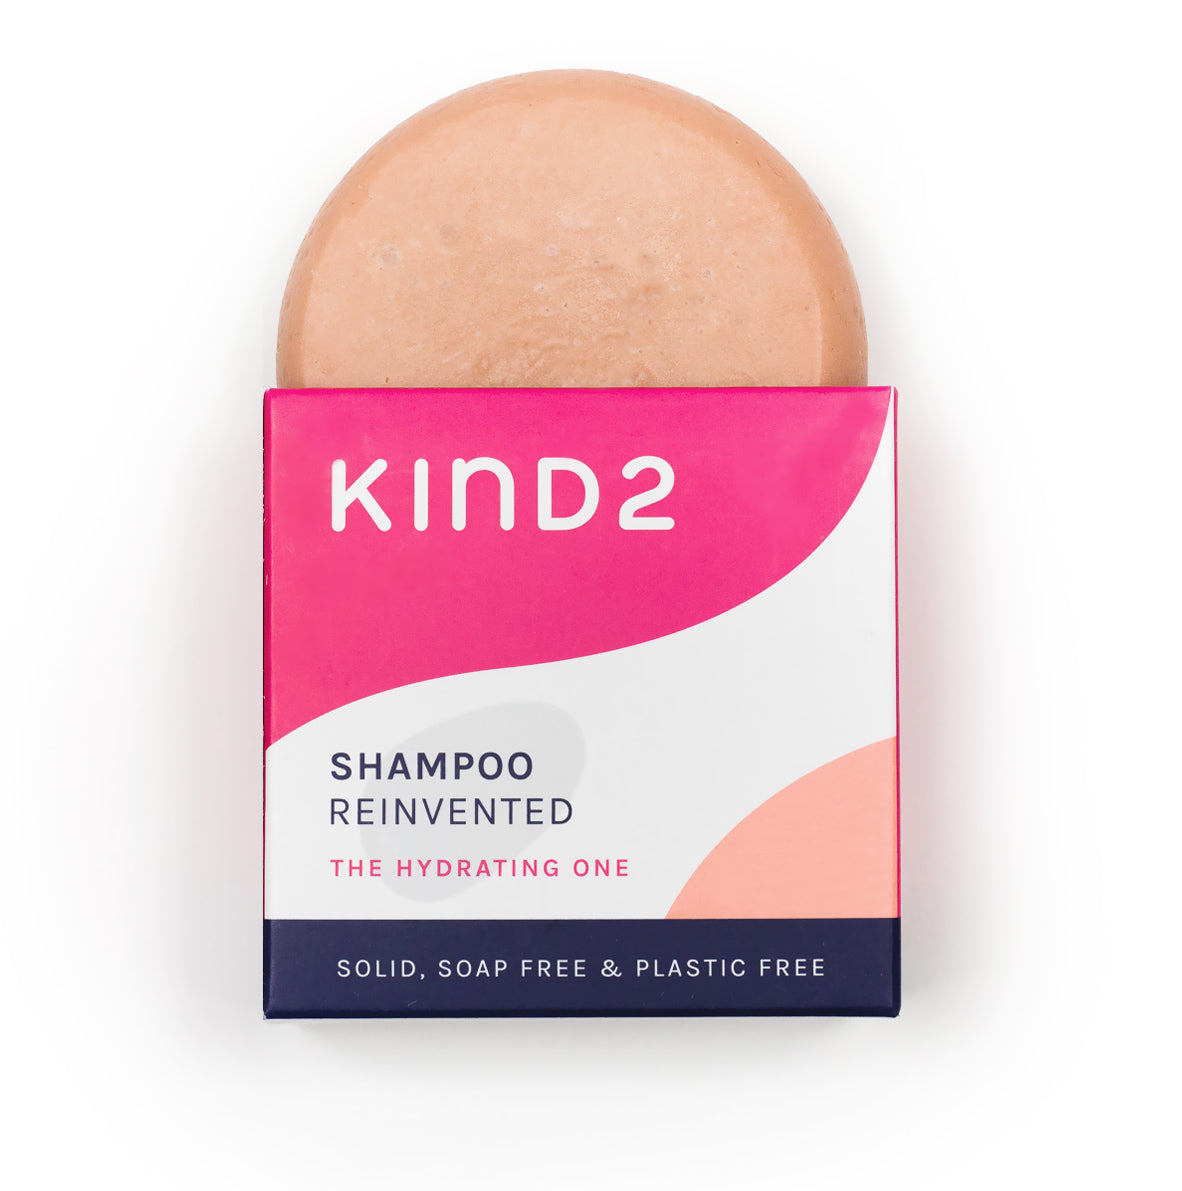 KIND2 The Hydrating One shampoo bar